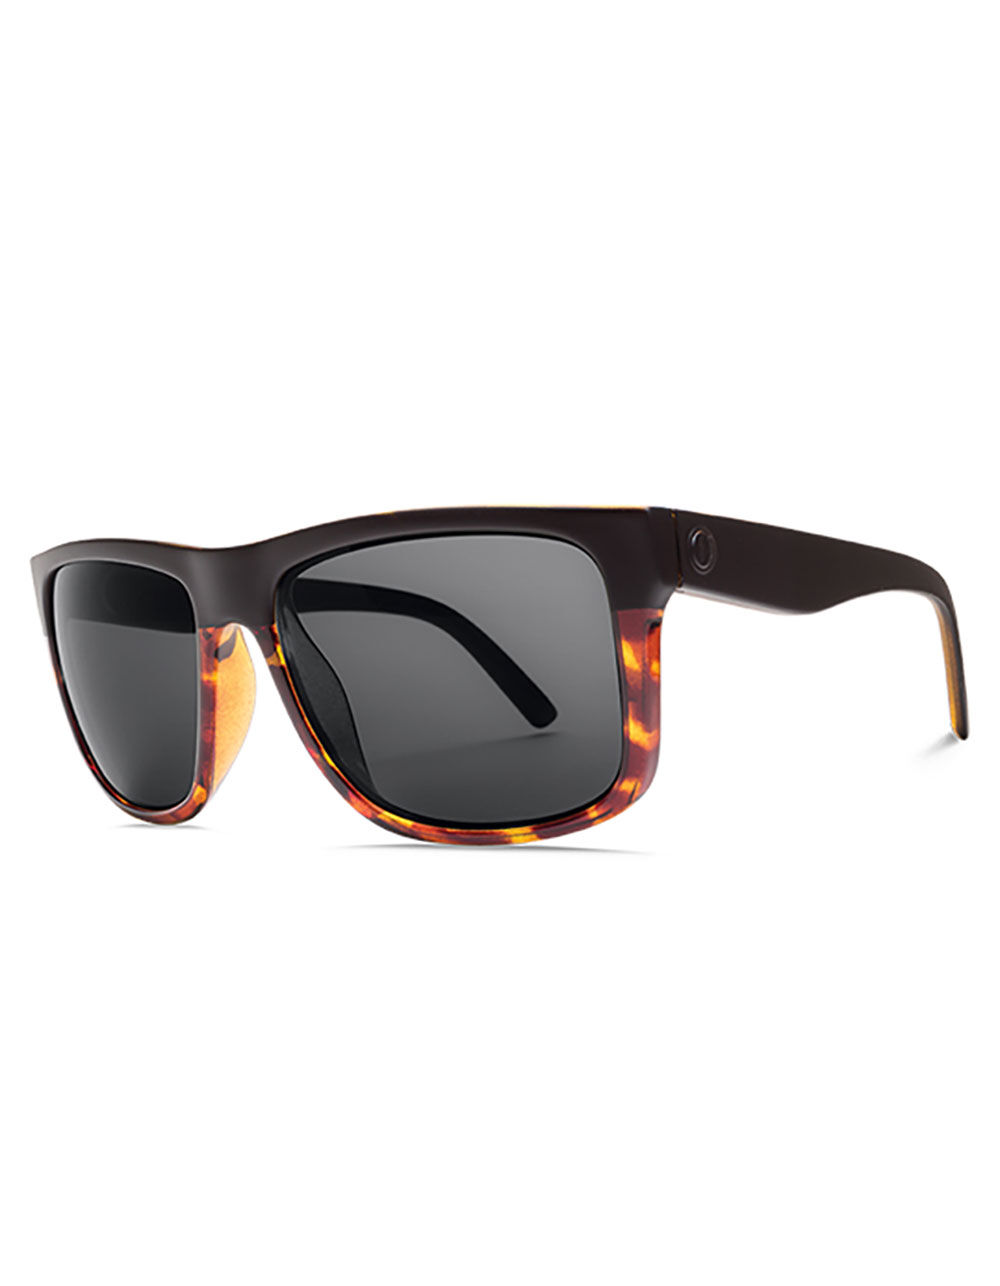 ELECTRIC Swingarm XL Darkside Polarized Sunglasses